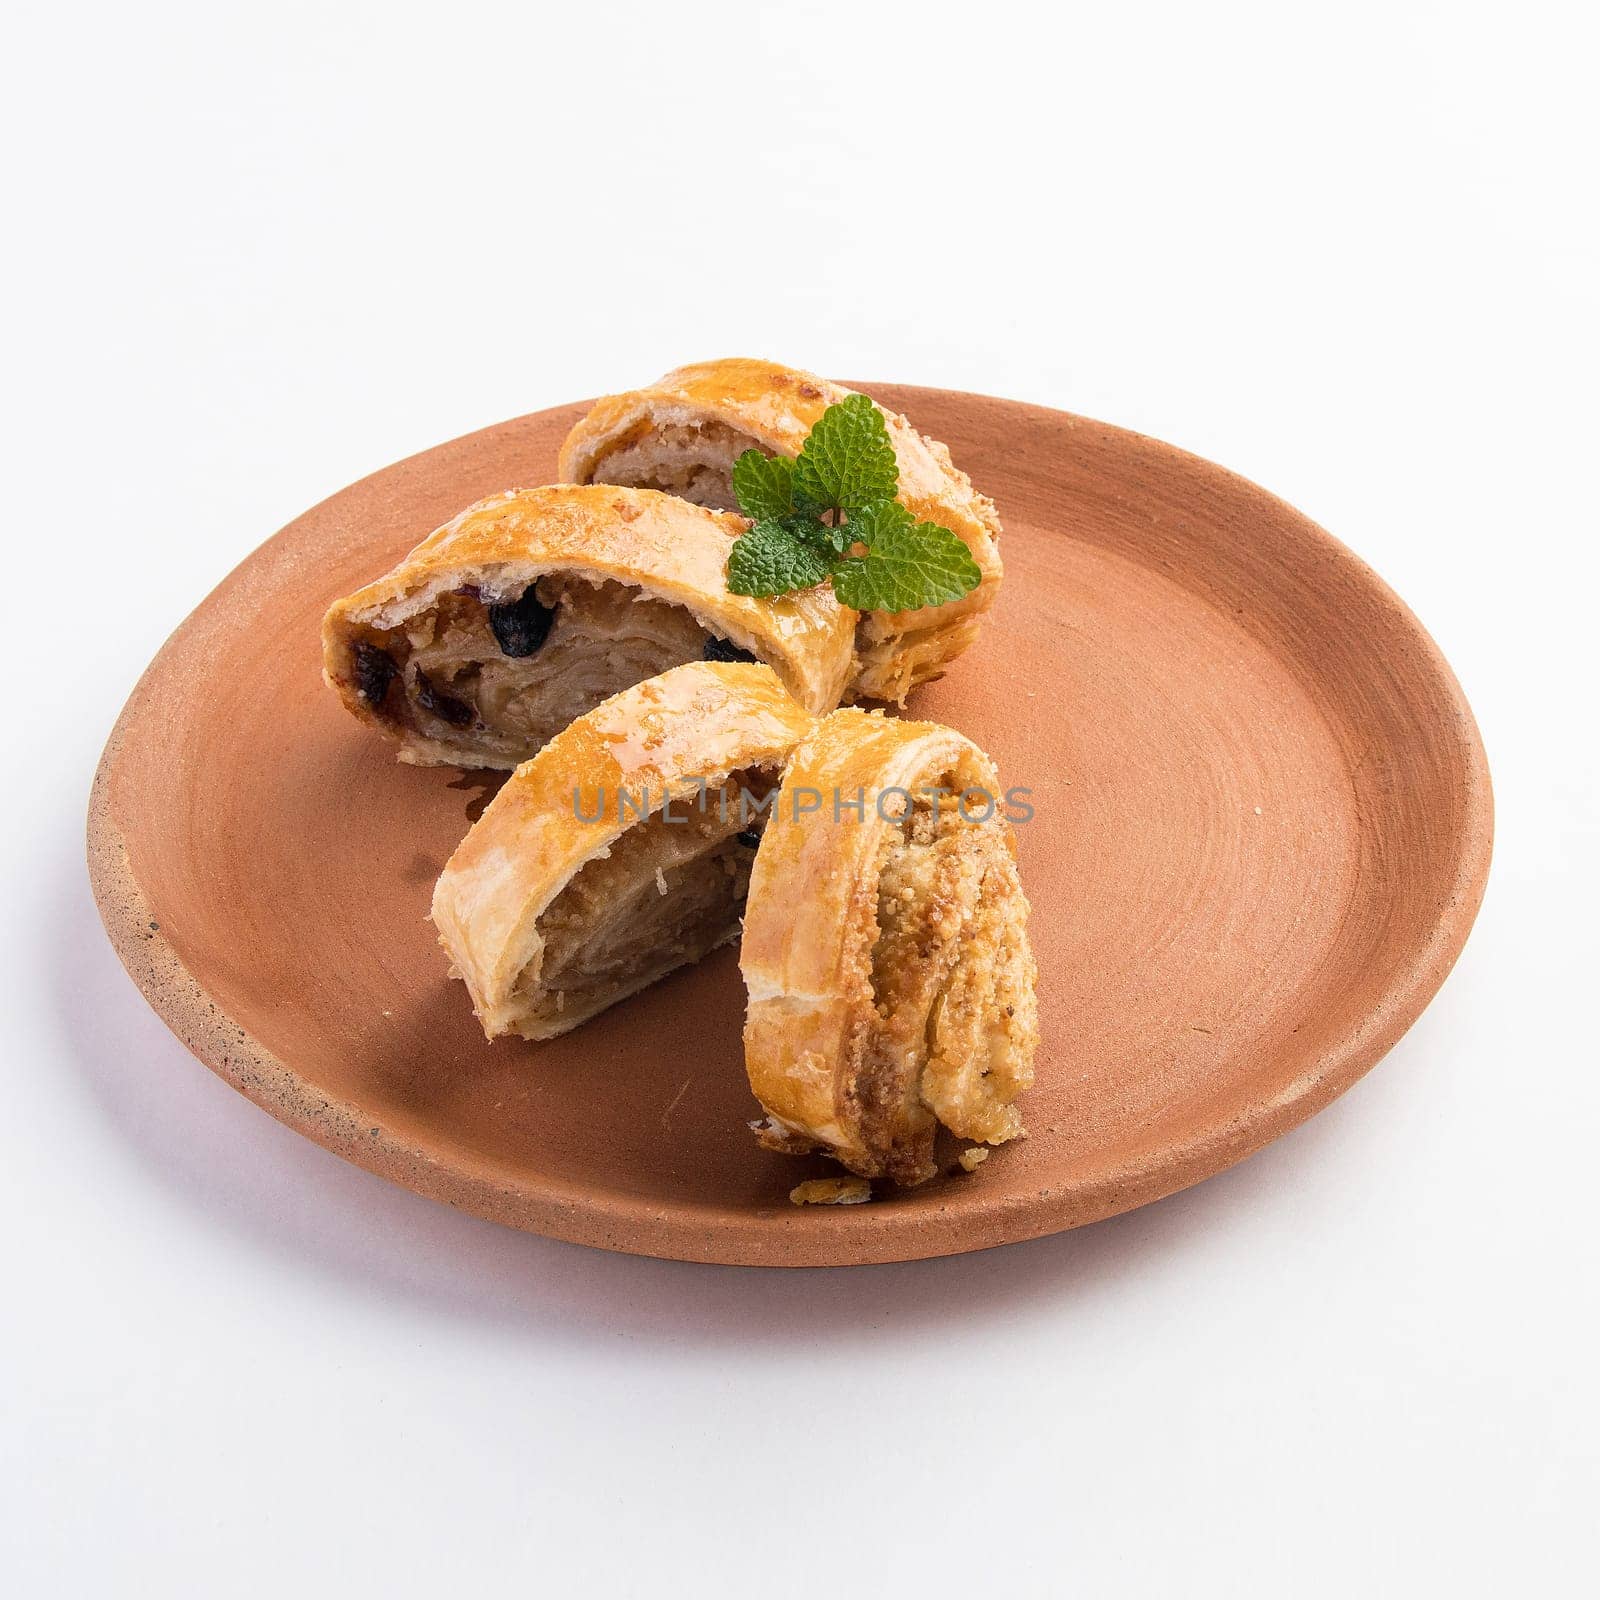 A beautiful shot of tasty sweet rolls with walnuts, raisins and sugar by A_Karim